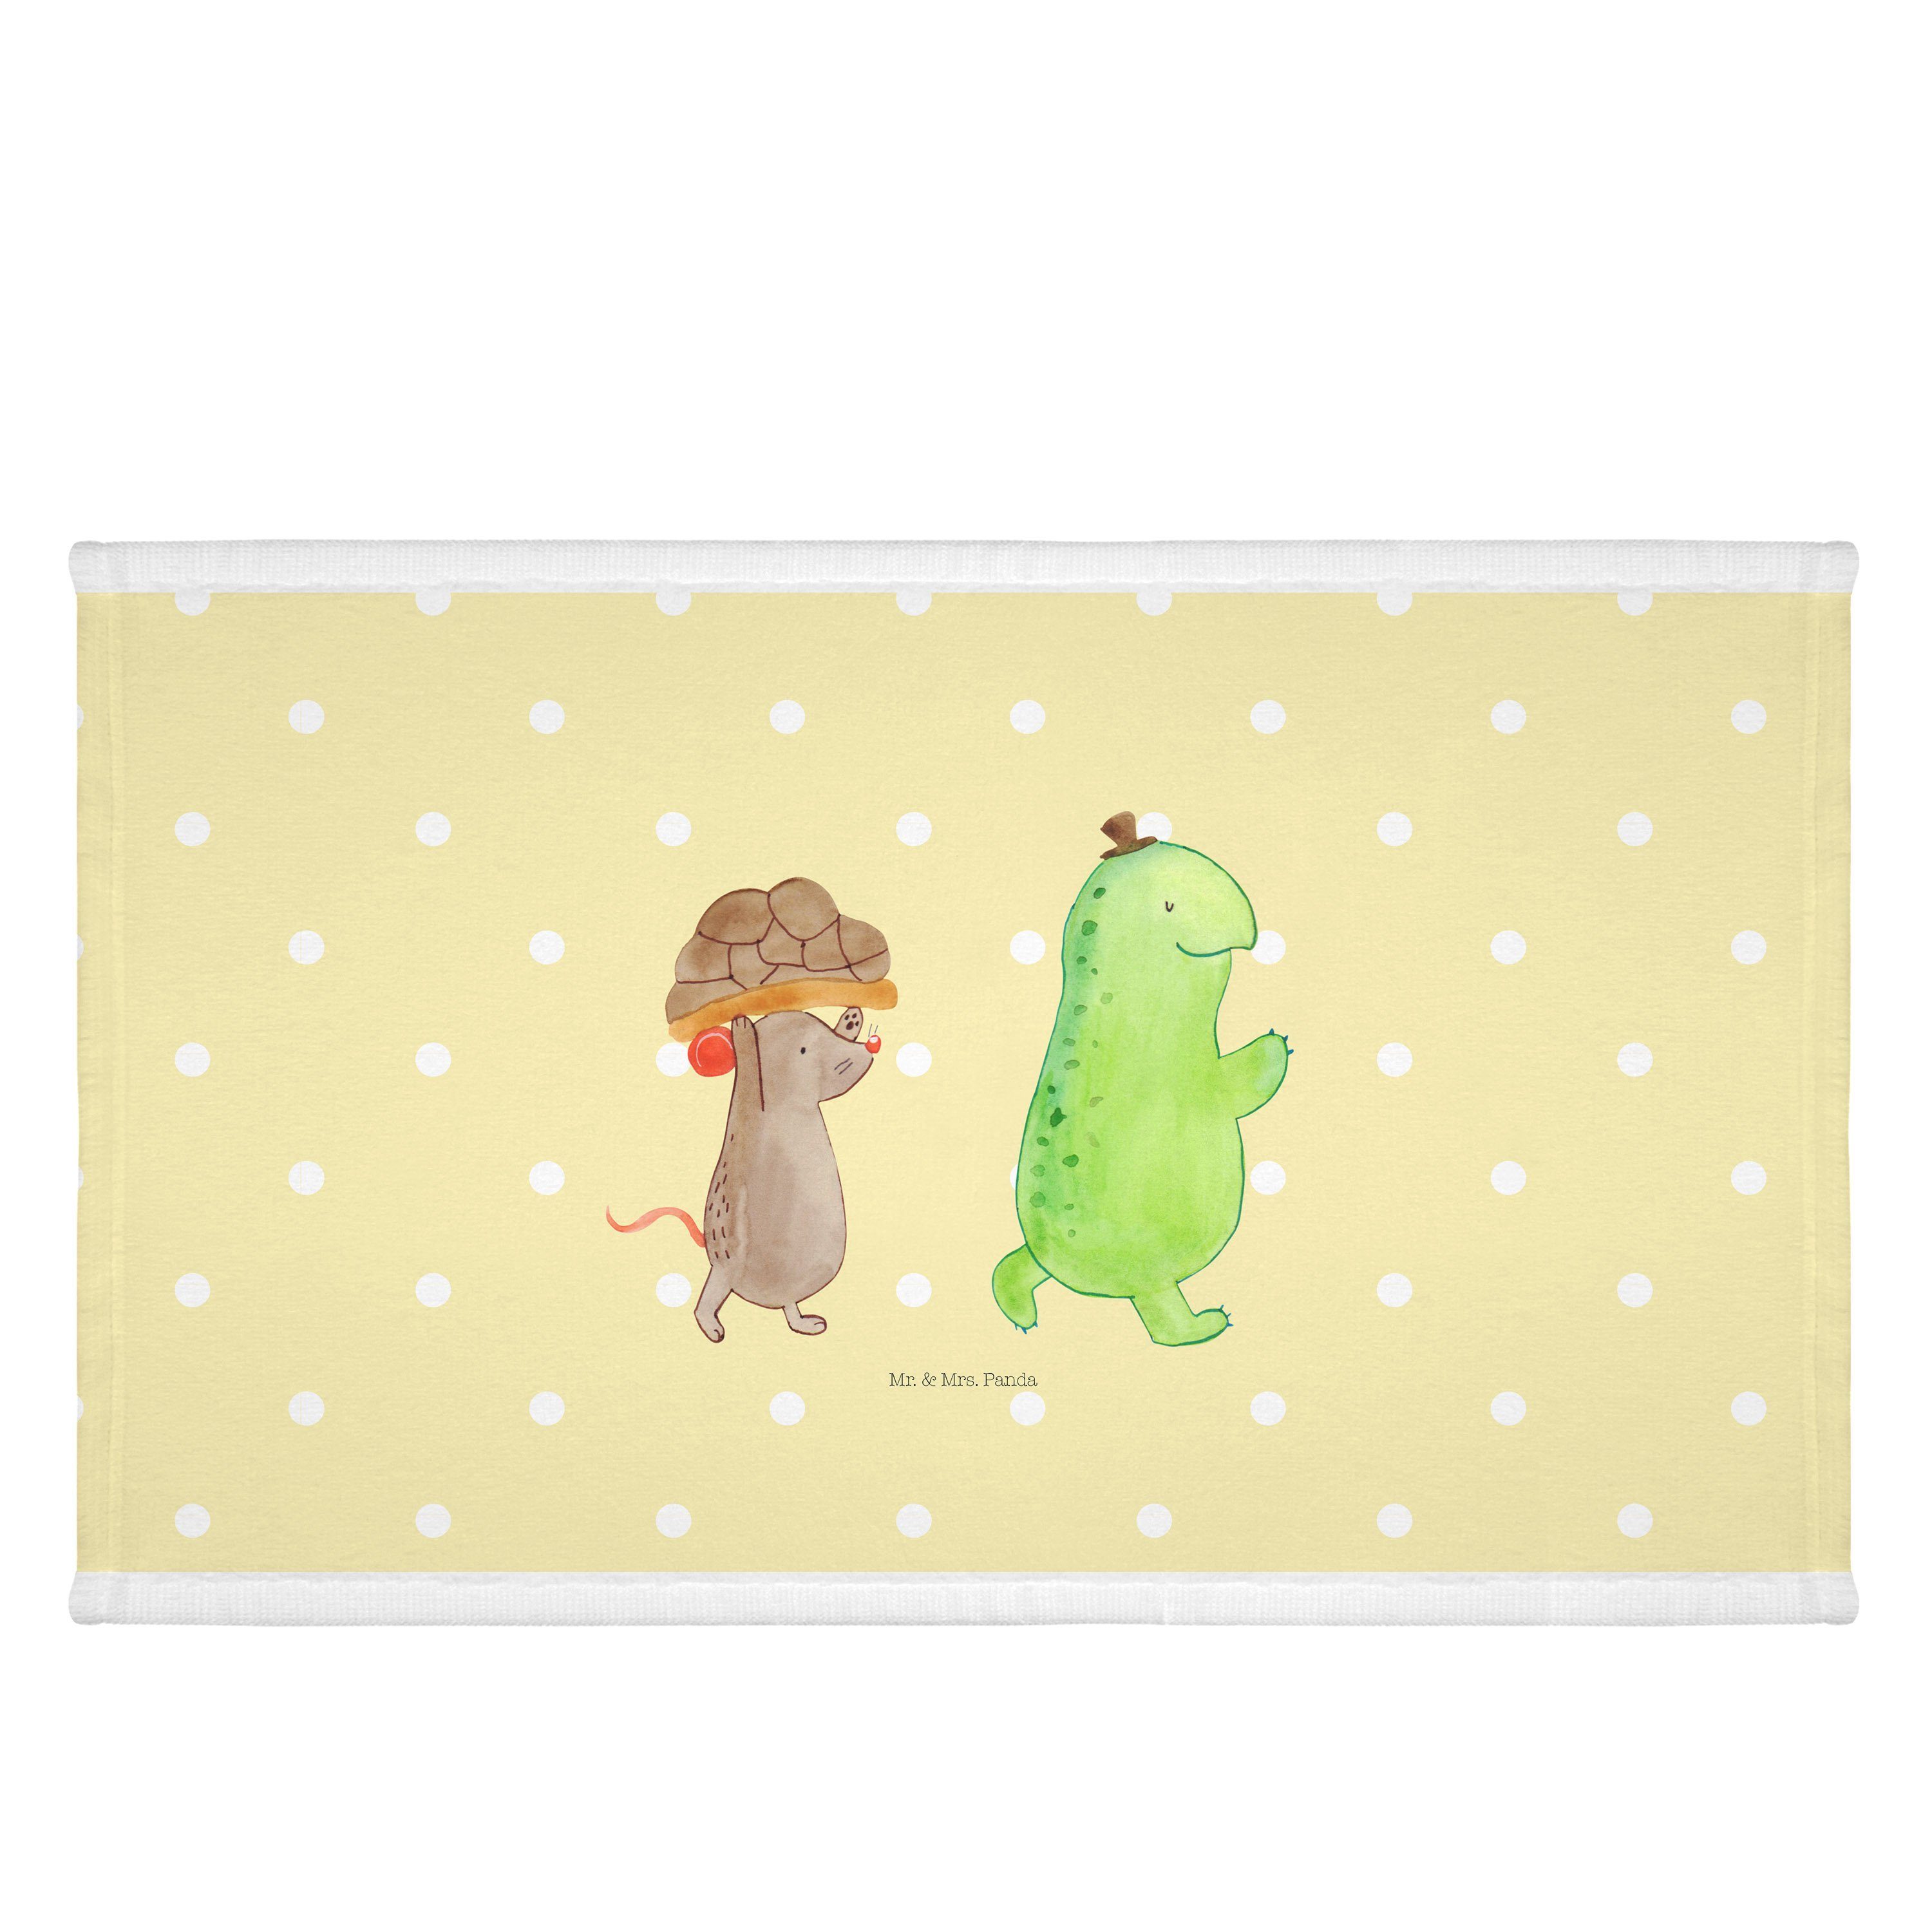 Mr. & Mrs. Panda Handtuch Schildkröte & Maus - Gelb Pastell - Geschenk, Freunde, fröhlich, Hand, (1-St) | Alle Handtücher